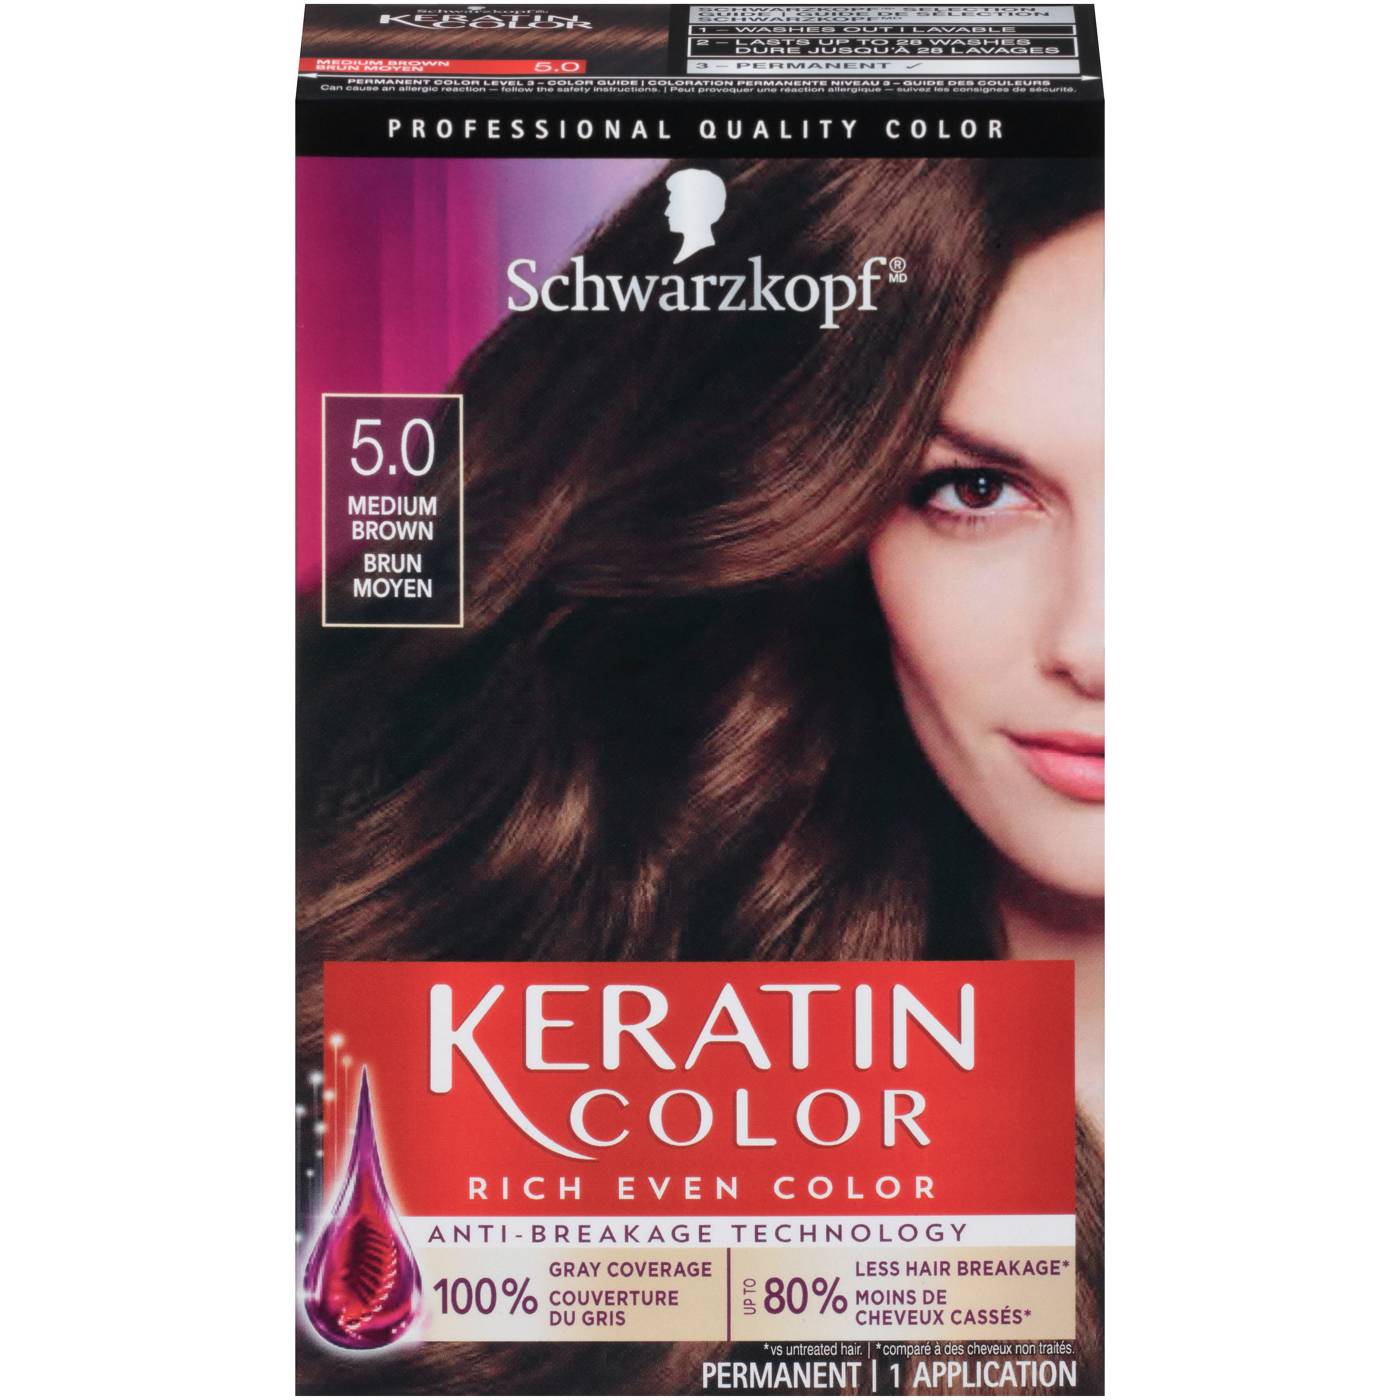 Schwarzkopf Keratin Color Permanent Hair Color Cream, 5.0 Medium Brown; image 1 of 5